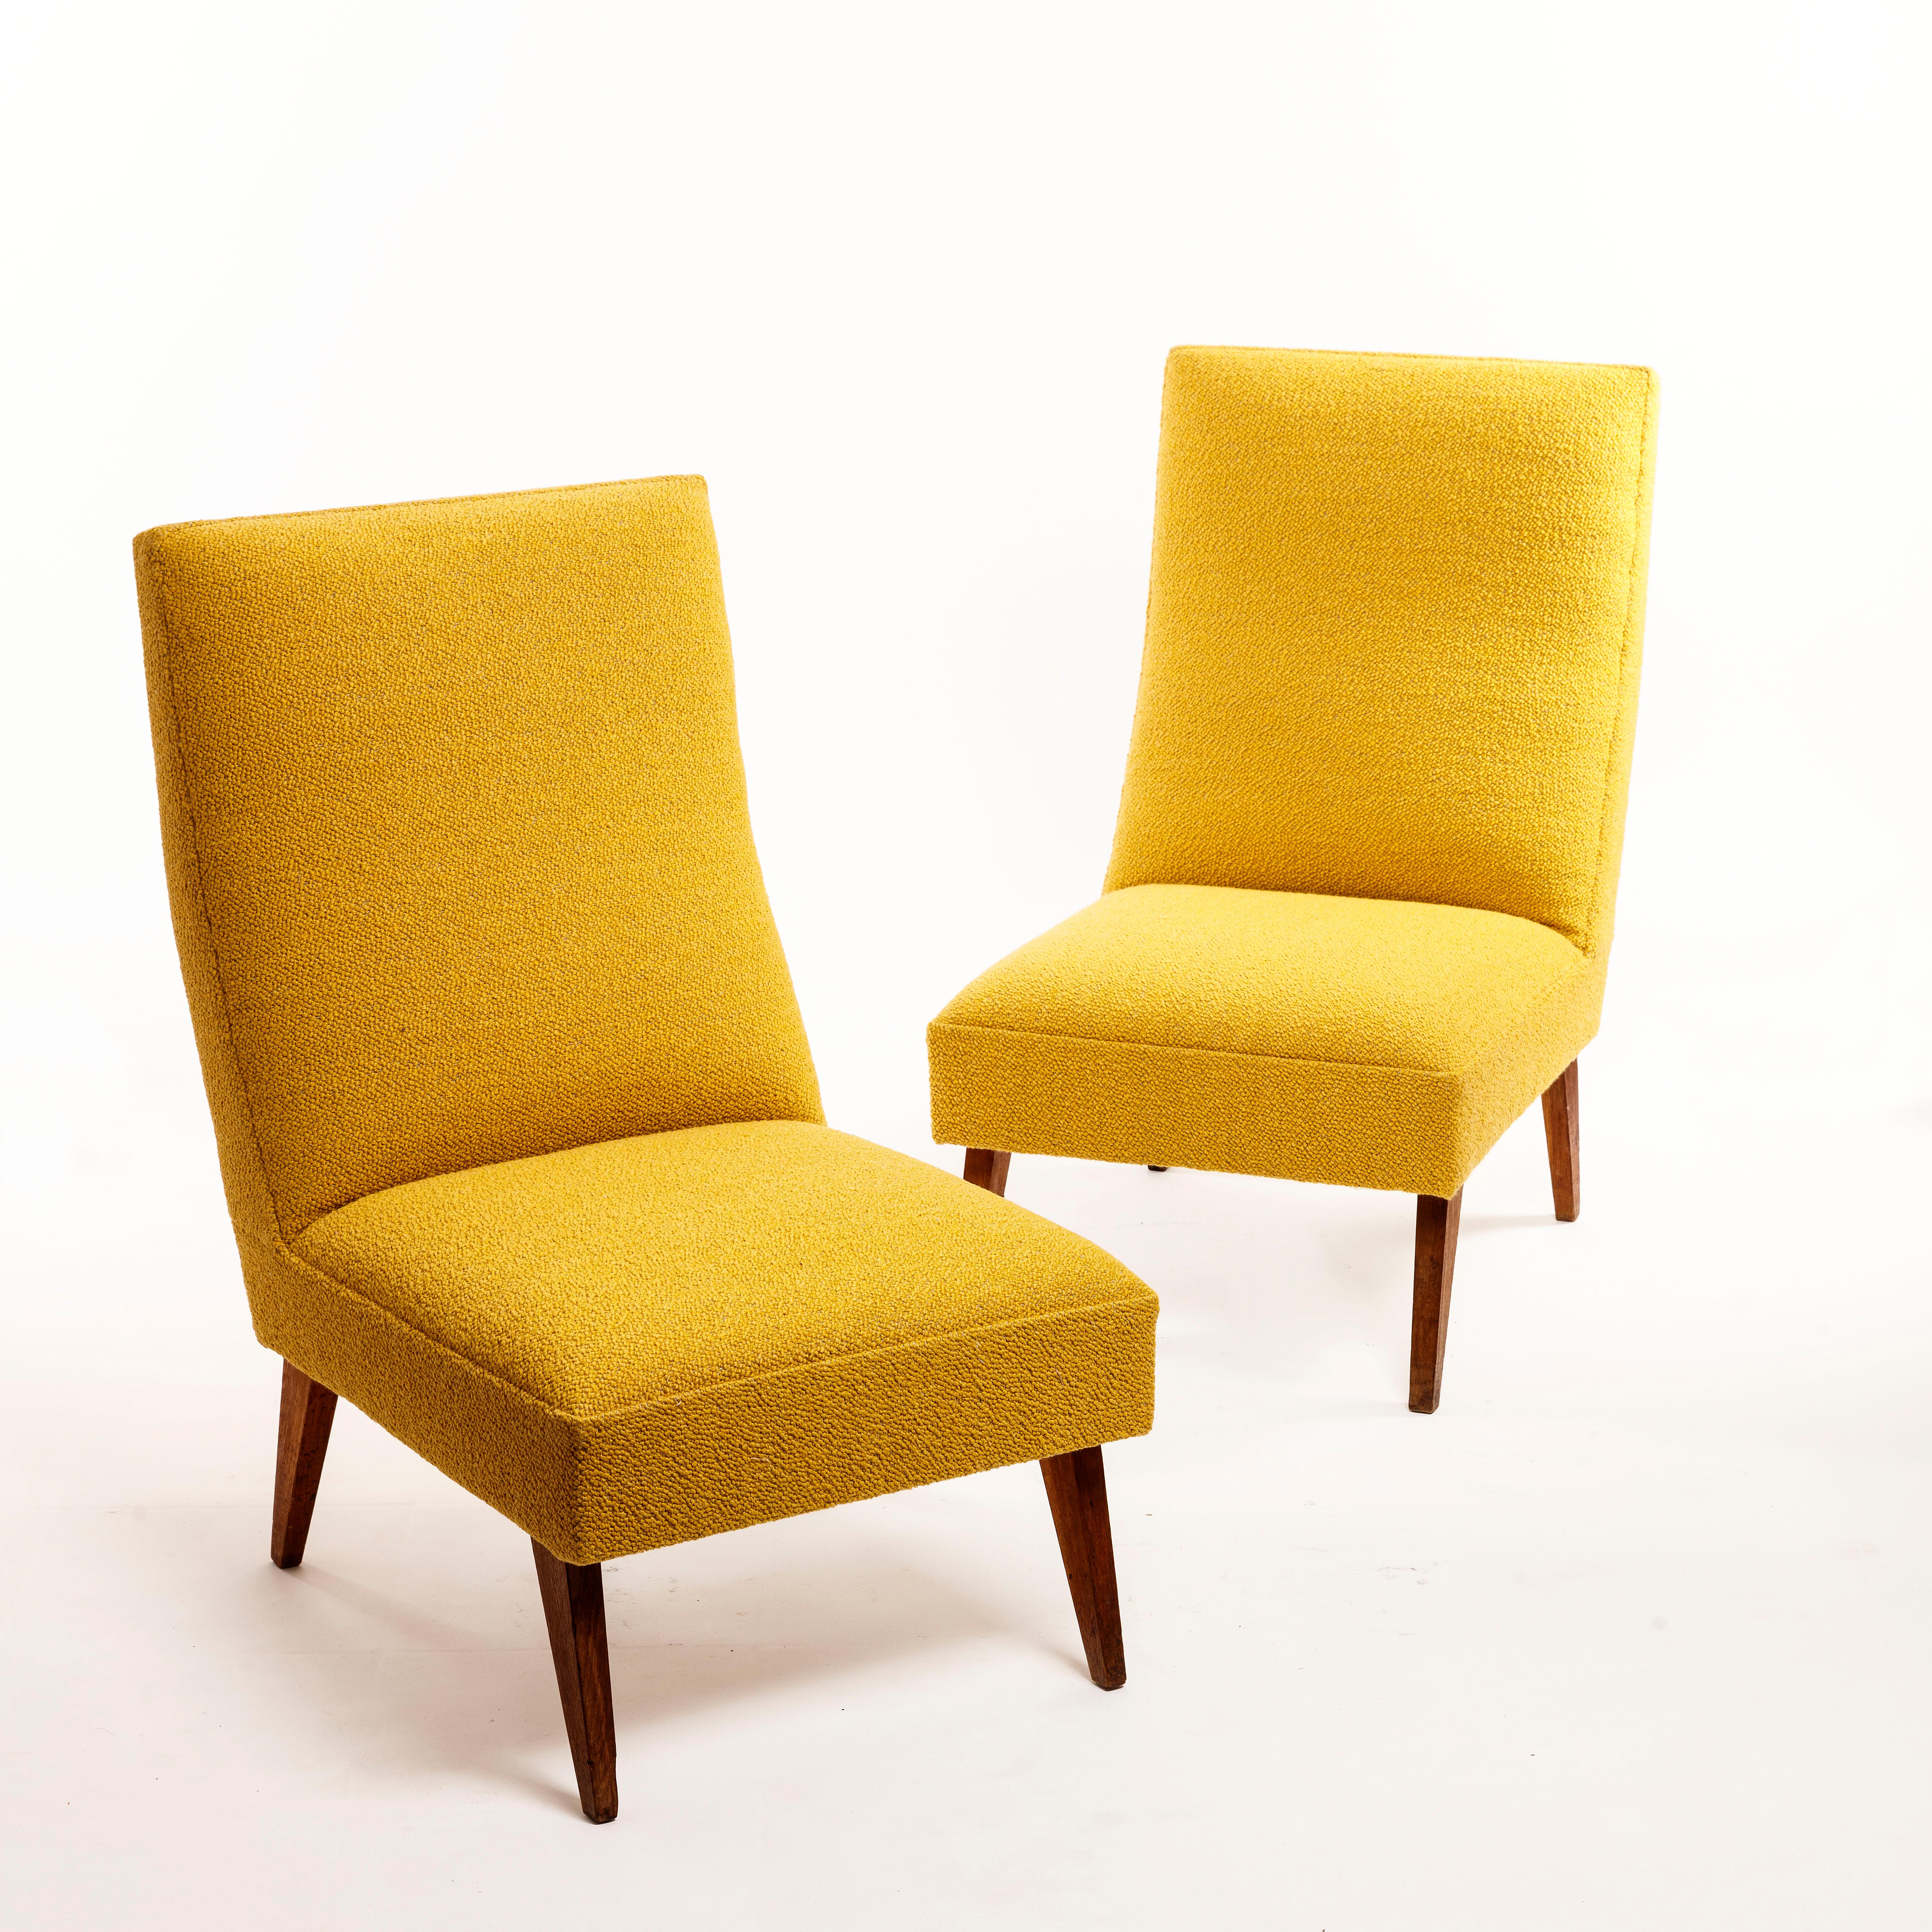 Emile Roset Yellow Lounge Chair Roset Editeur 1955 Antony university residence For Sale 4